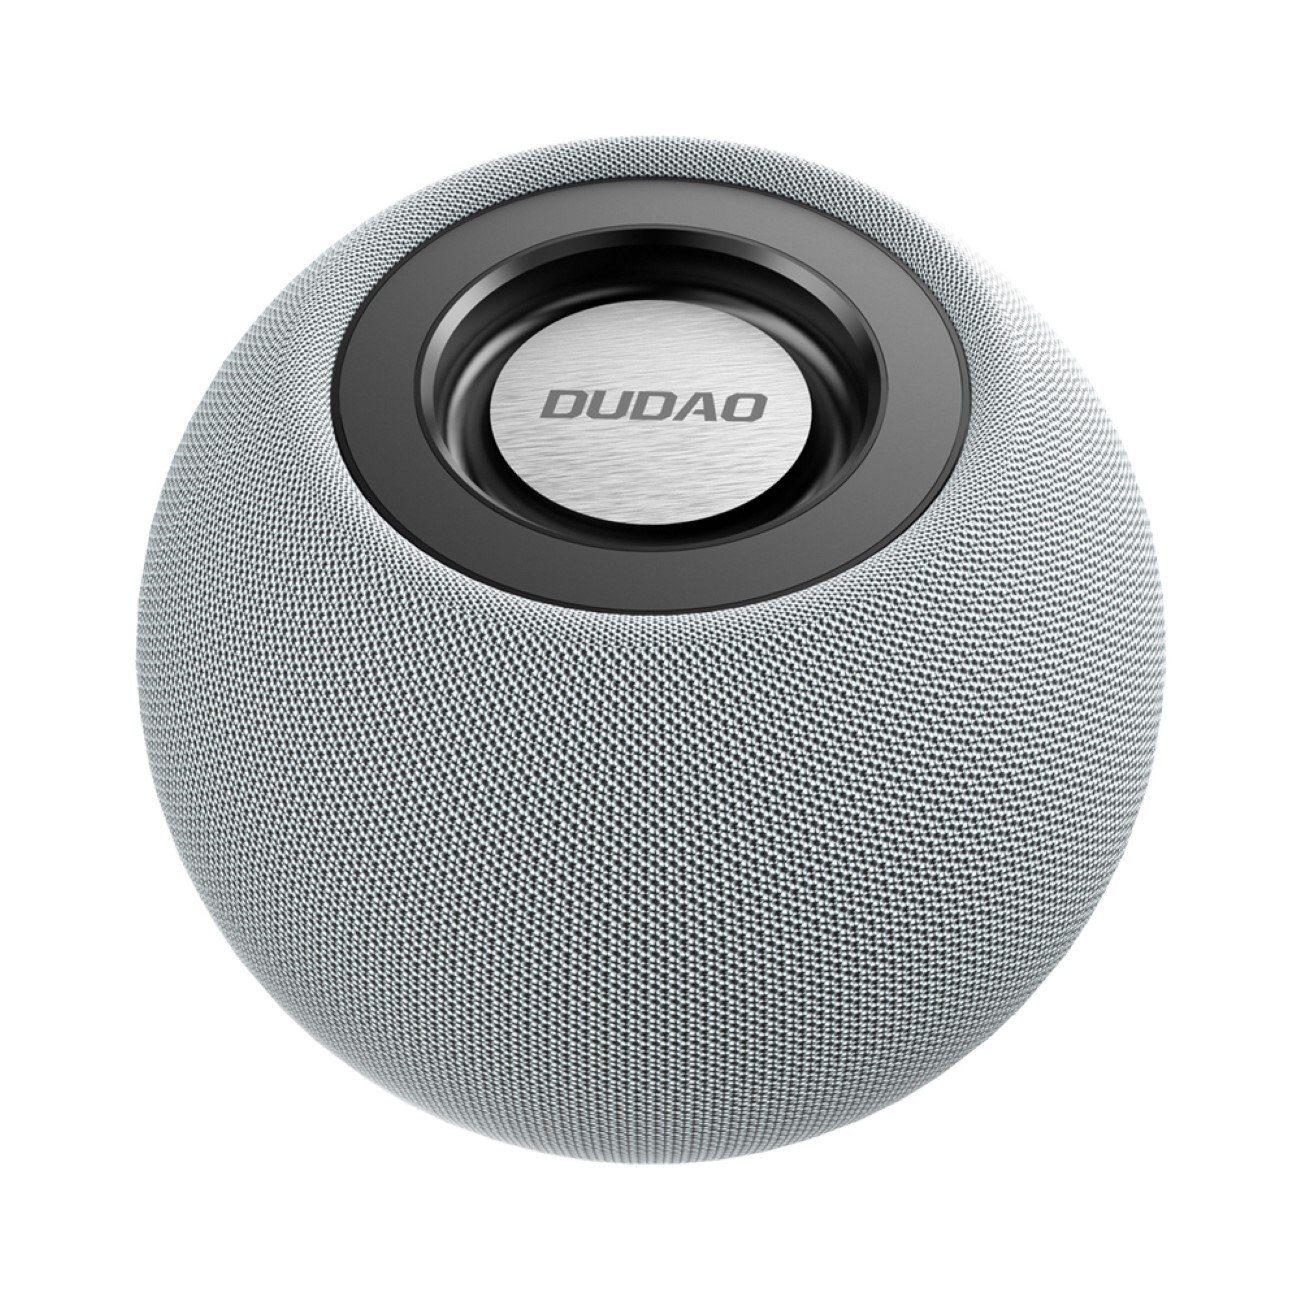 Dudao Wireless Bluetooth 5.0 Lautsprecher Grau 10m Bluetooth-Lautsprecher 500mAh Reichweite